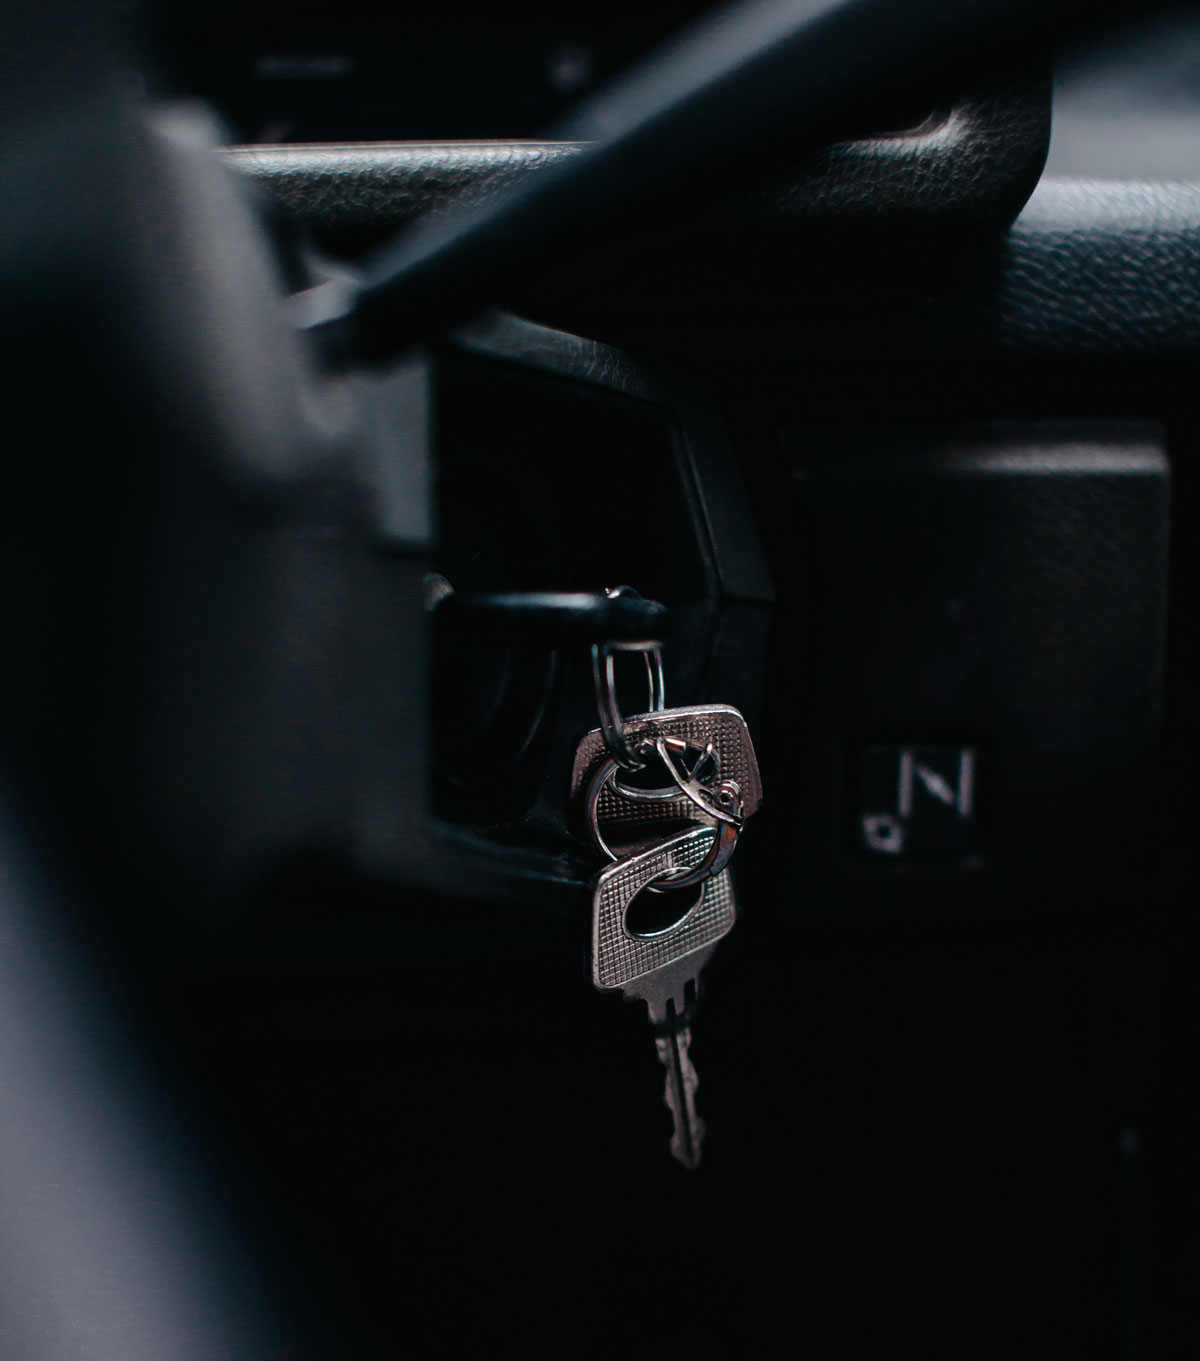 car-keys-in-ignition